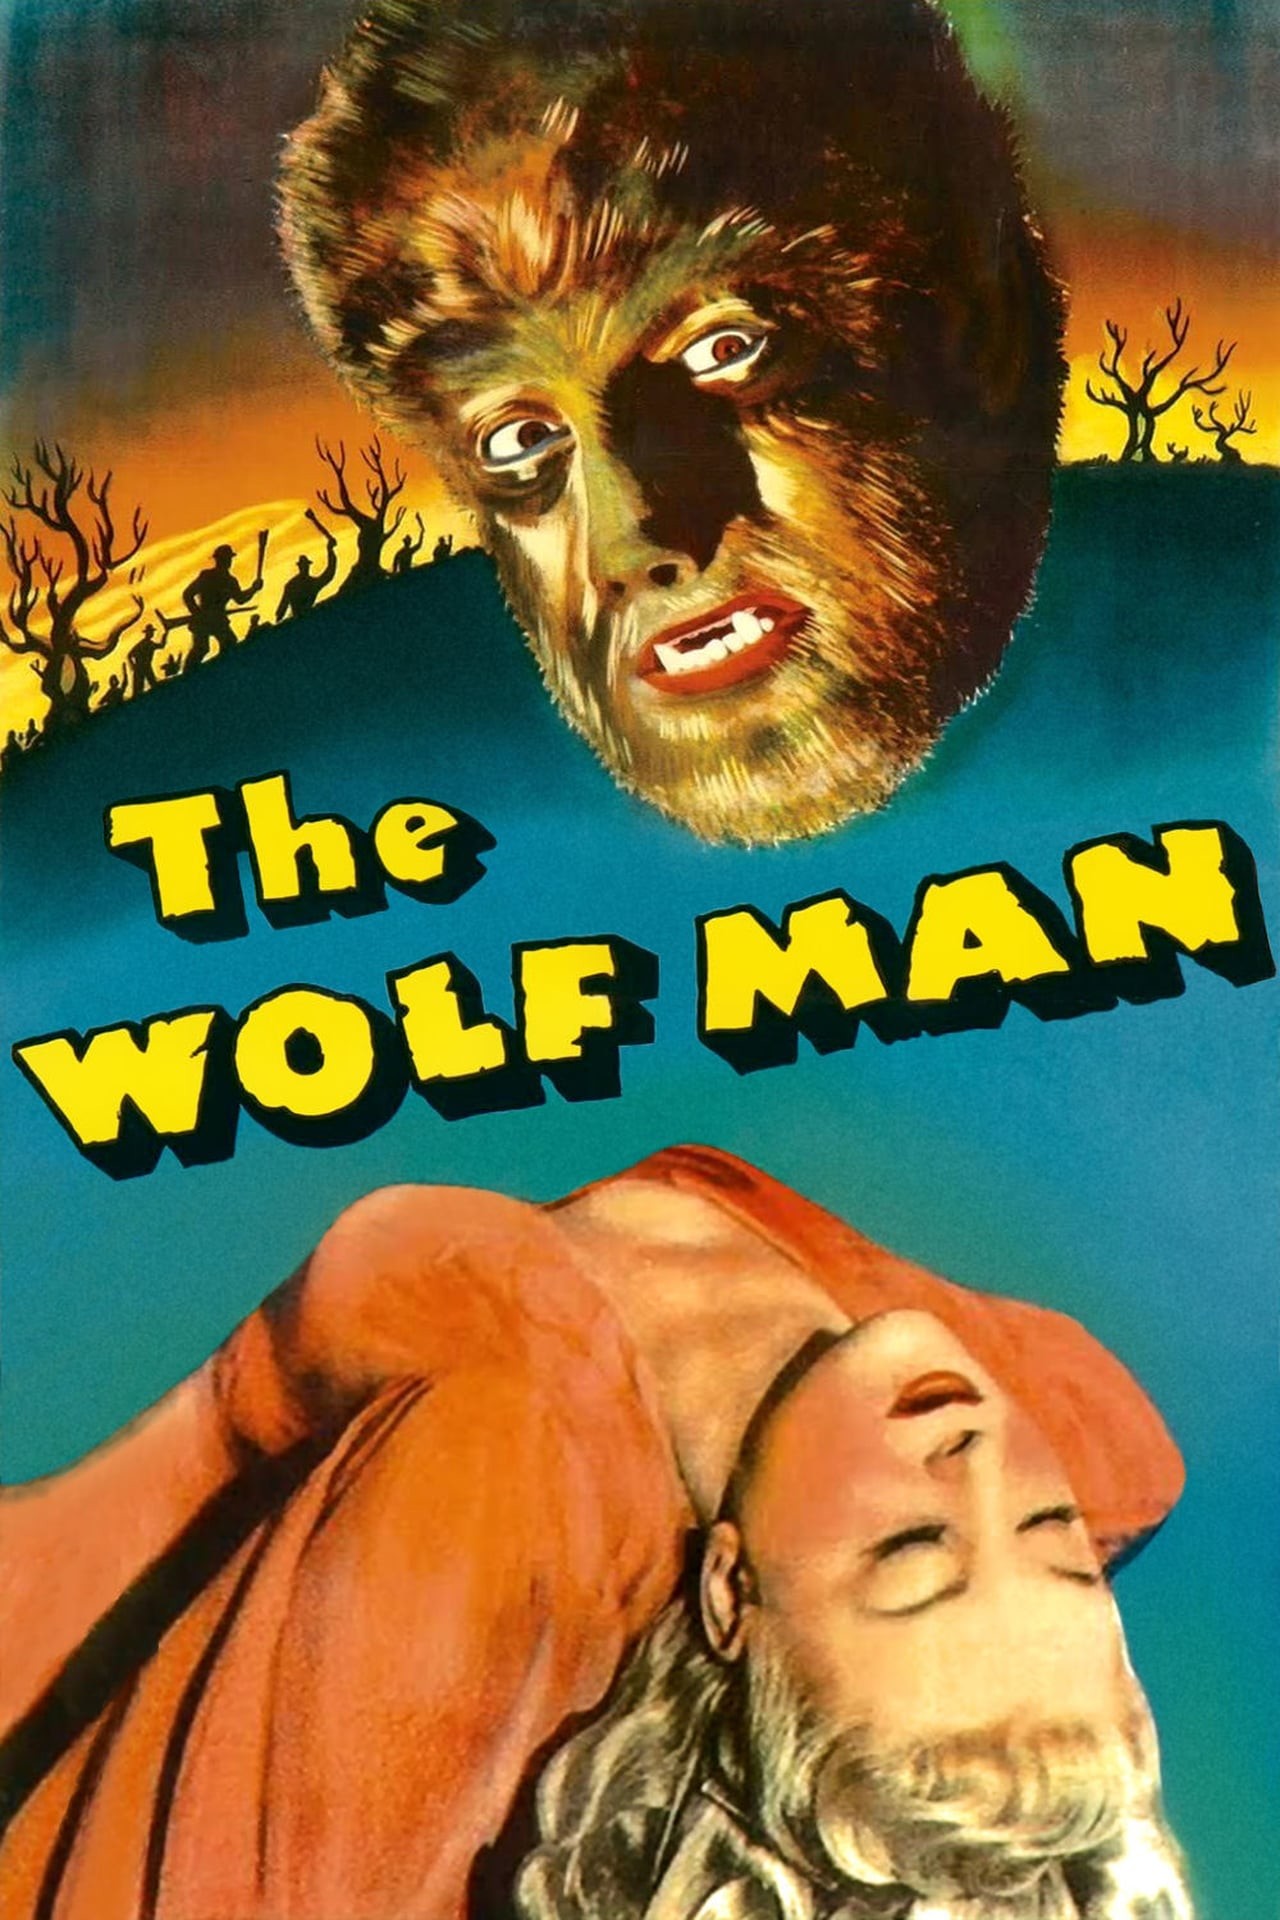 THE WOLF MAN [1941]